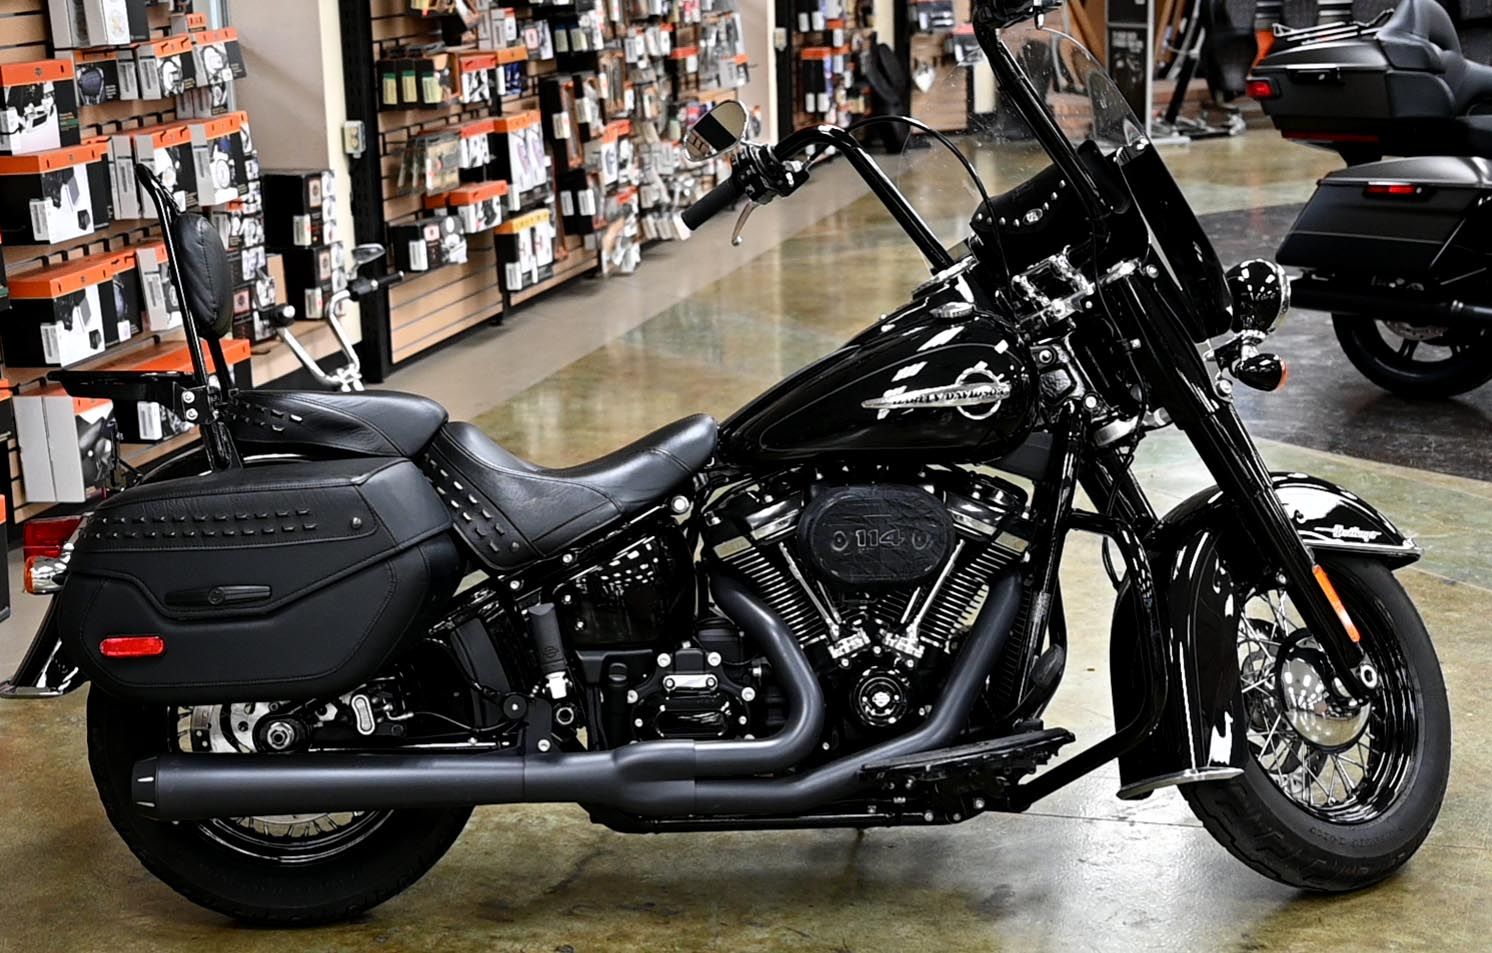 Used 2019 Harley Davidson Heritage Classic 114 Vivid Black Motorcycles In Jackson Ms N A